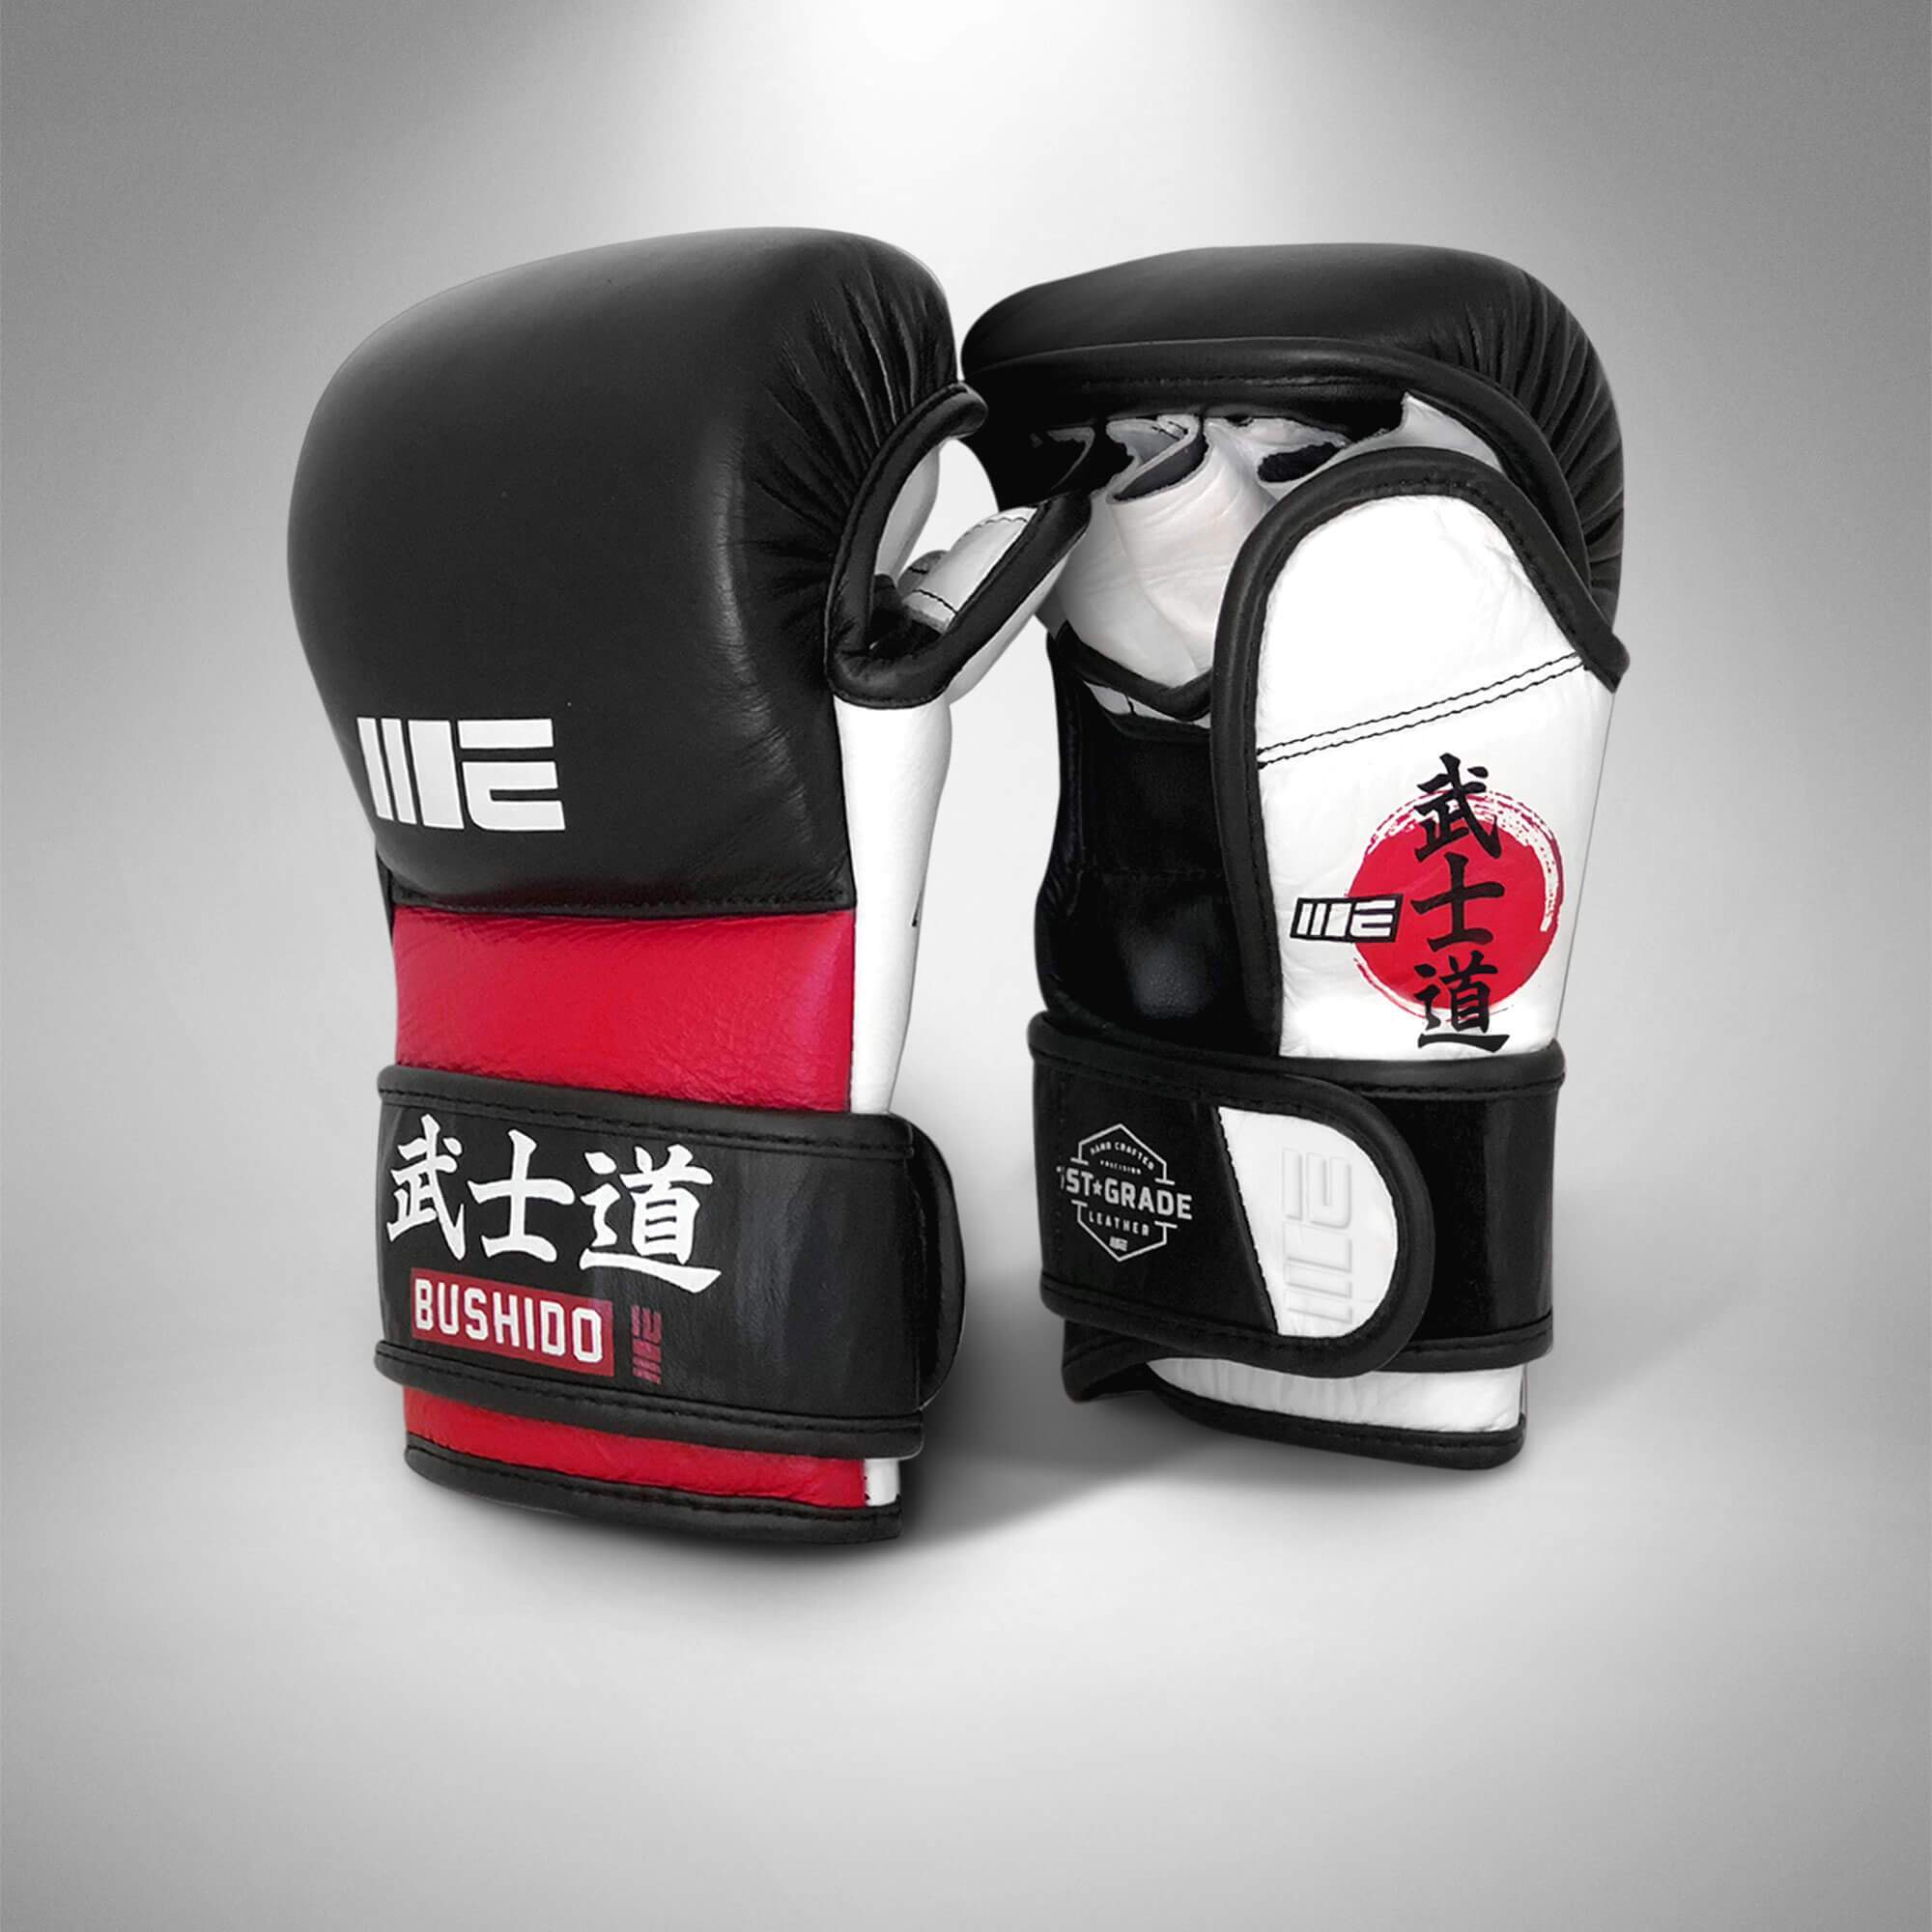 Engage Bushido Spar & Grapple Gloves